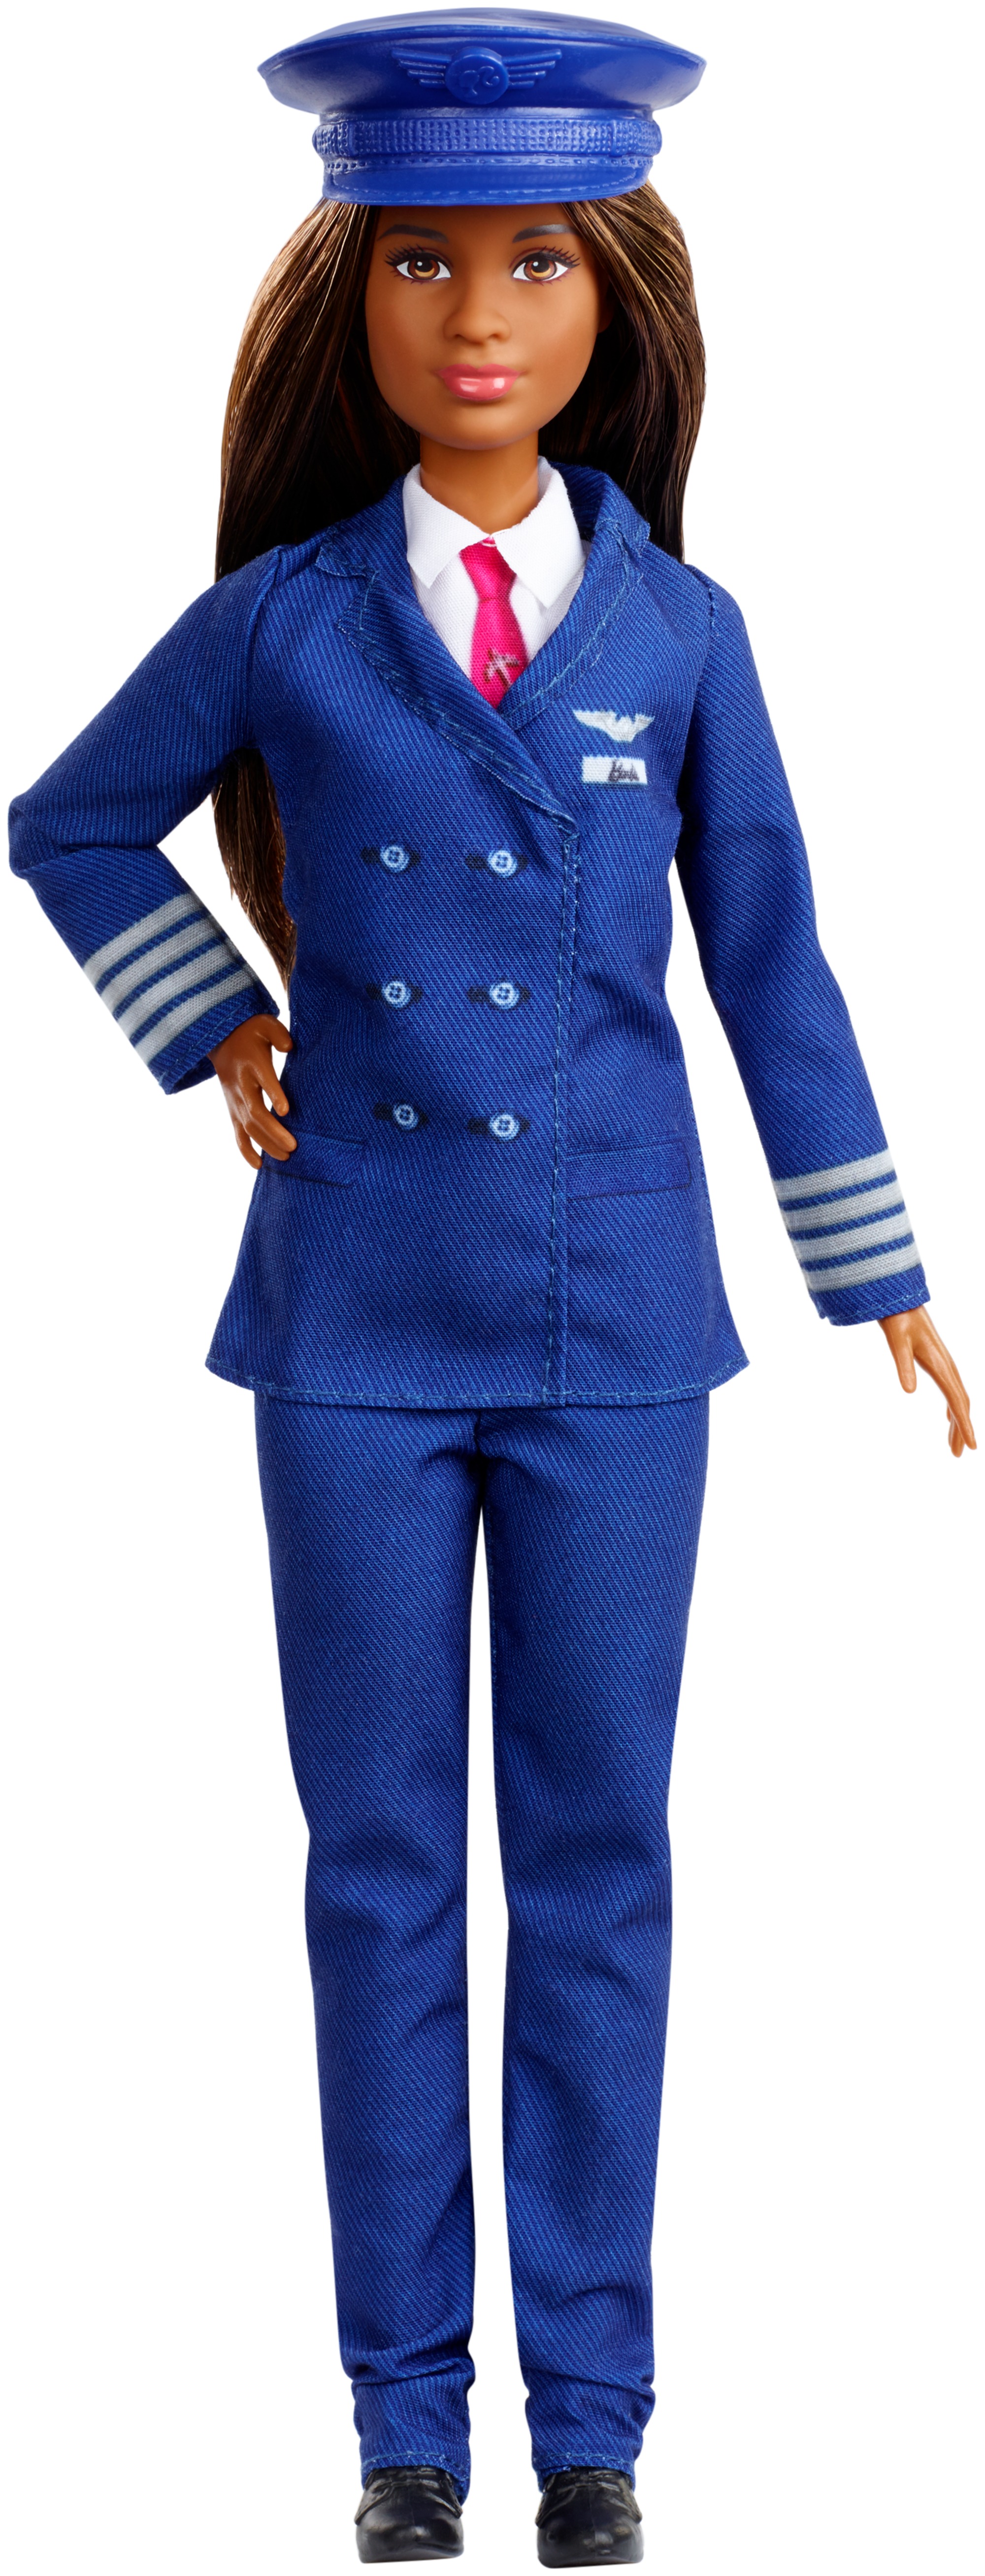 Barbie Pilot Doll